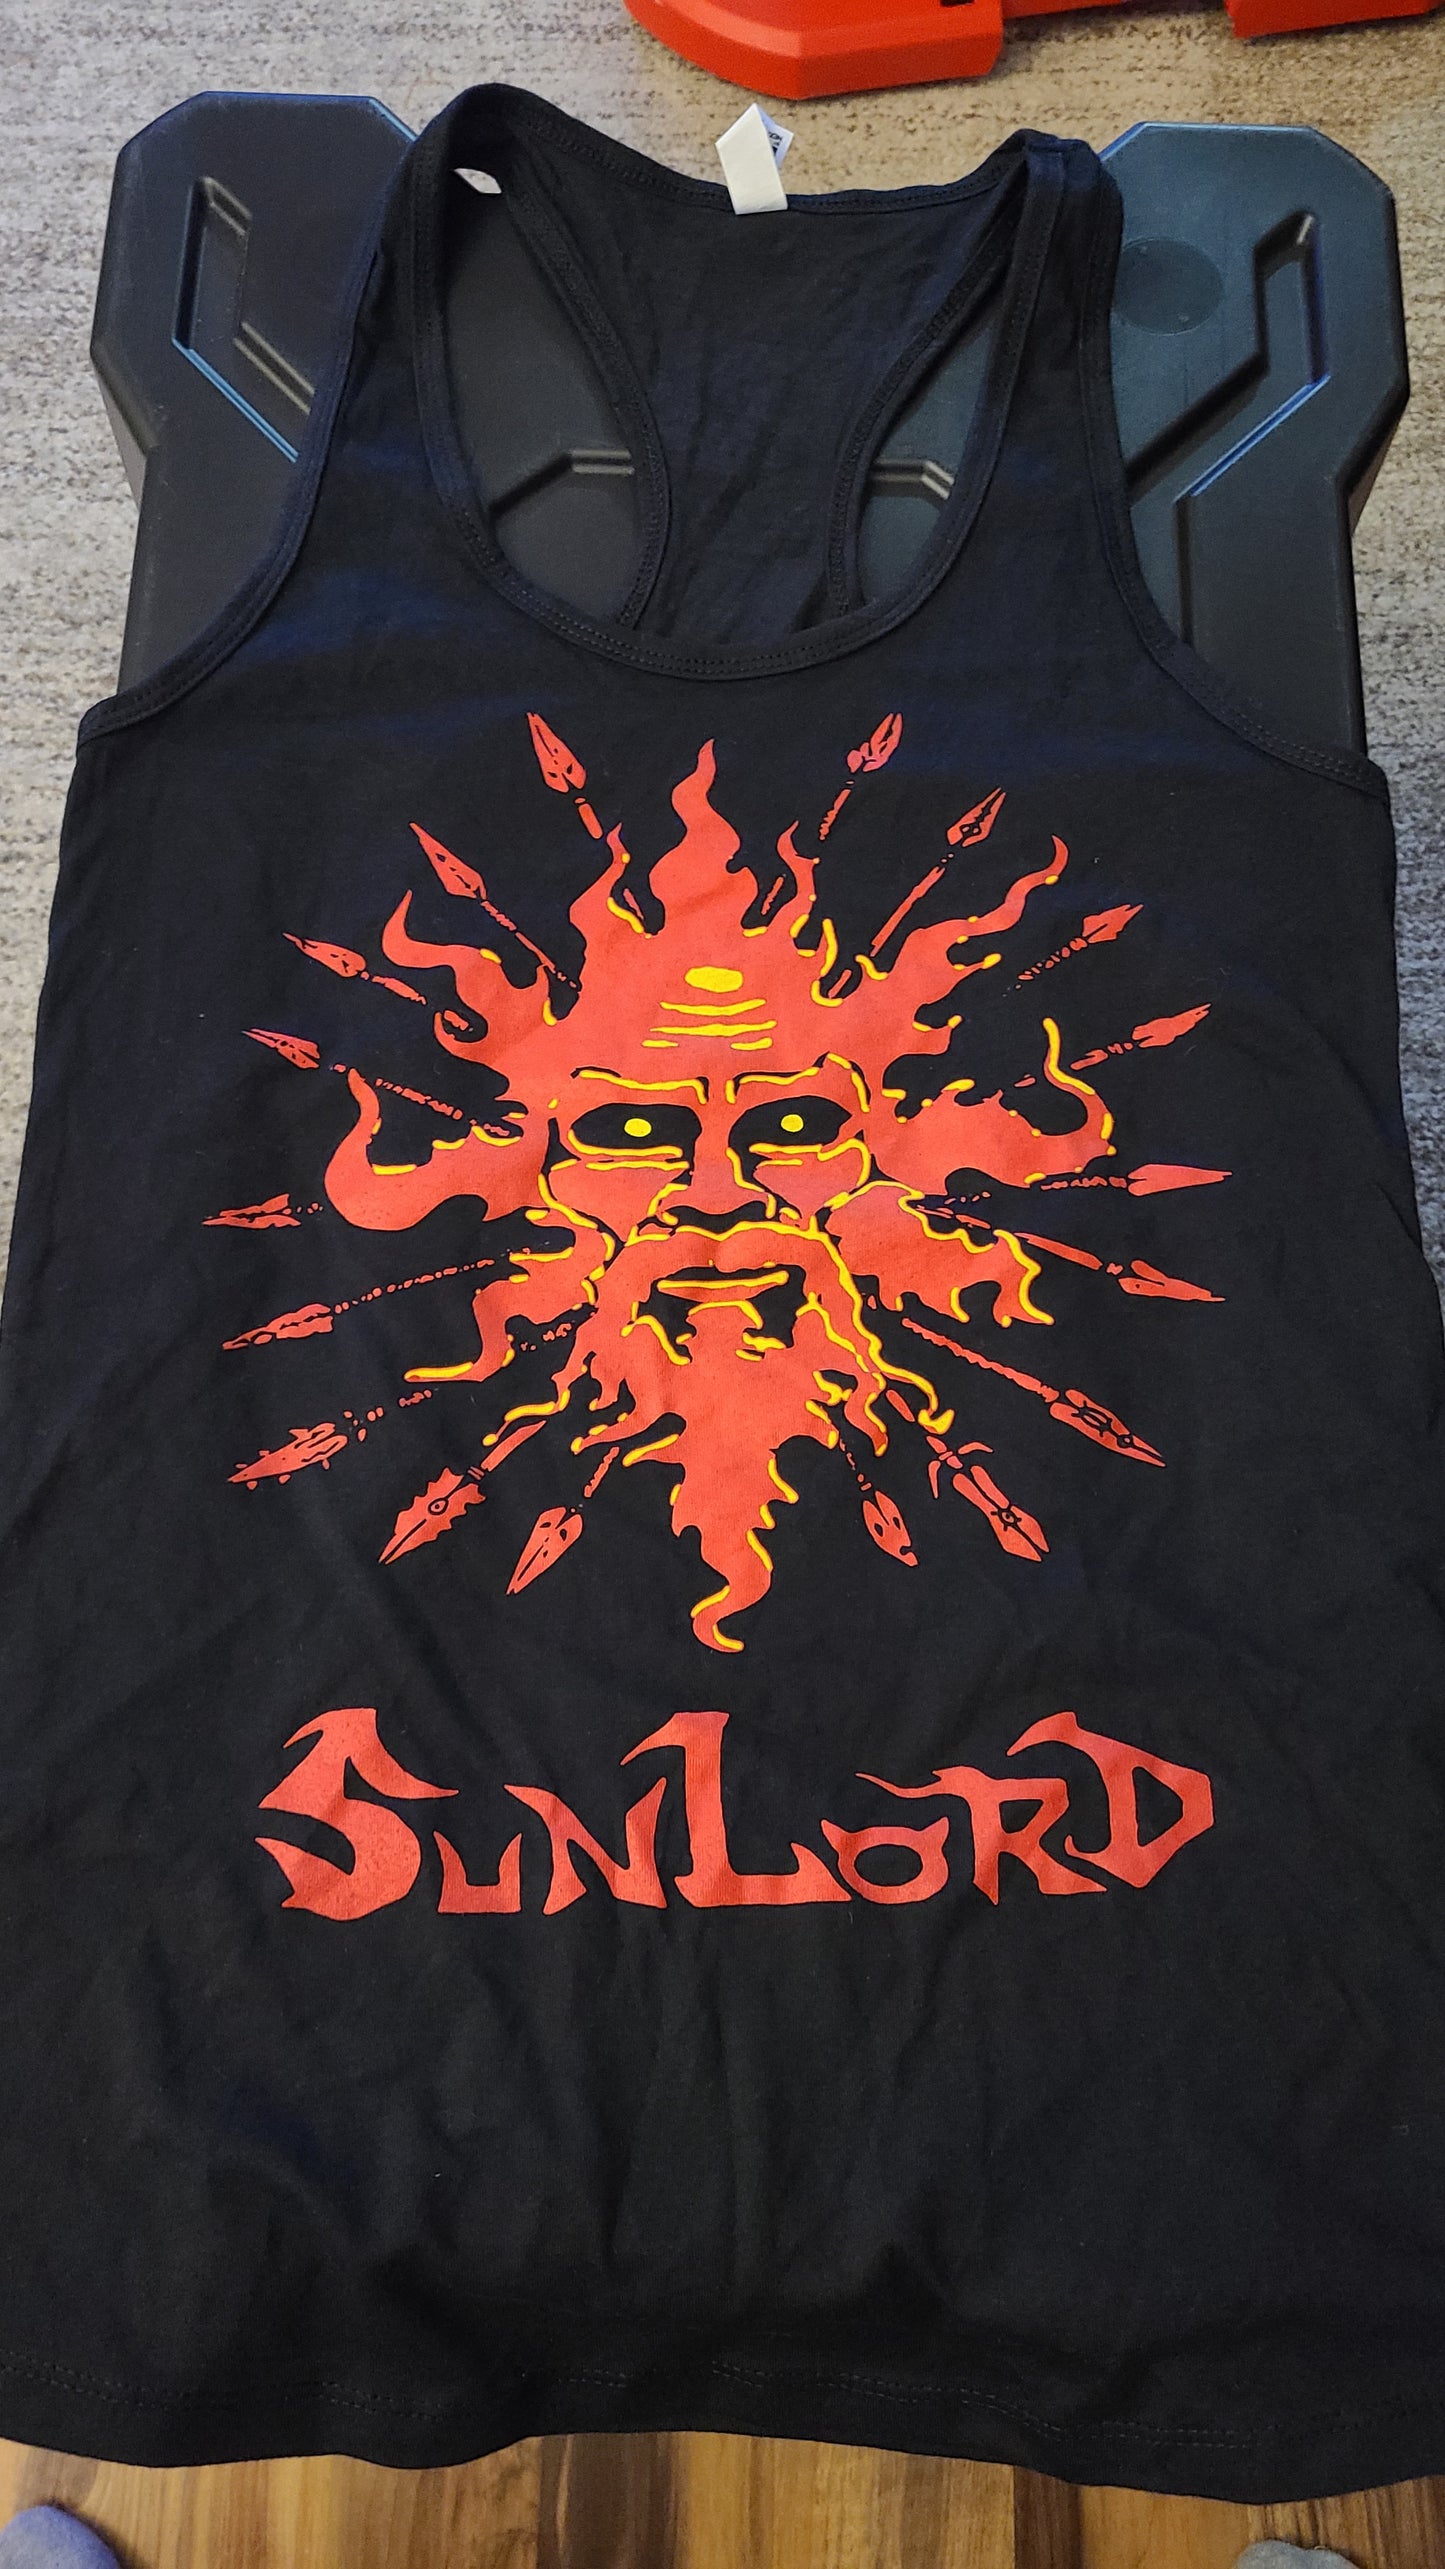 Sunlord - Red Sun tank top (women's)